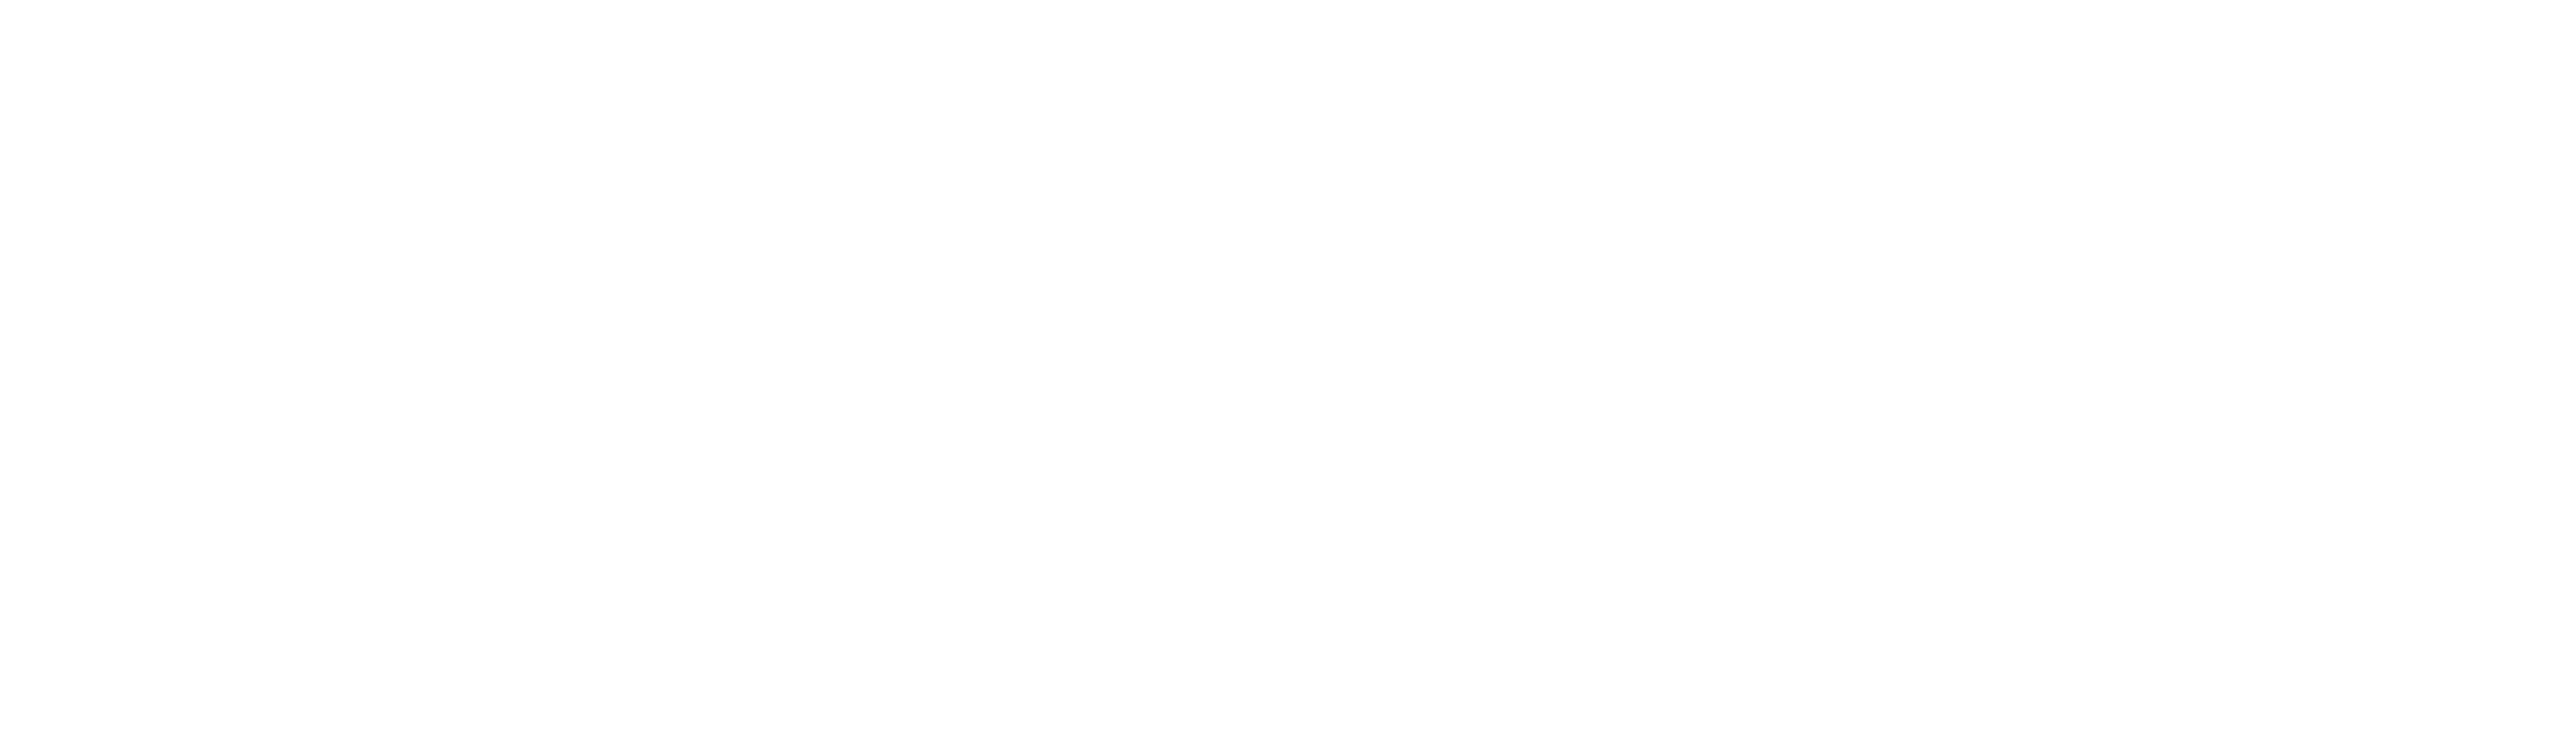 Take Your Shot at $1,000,000